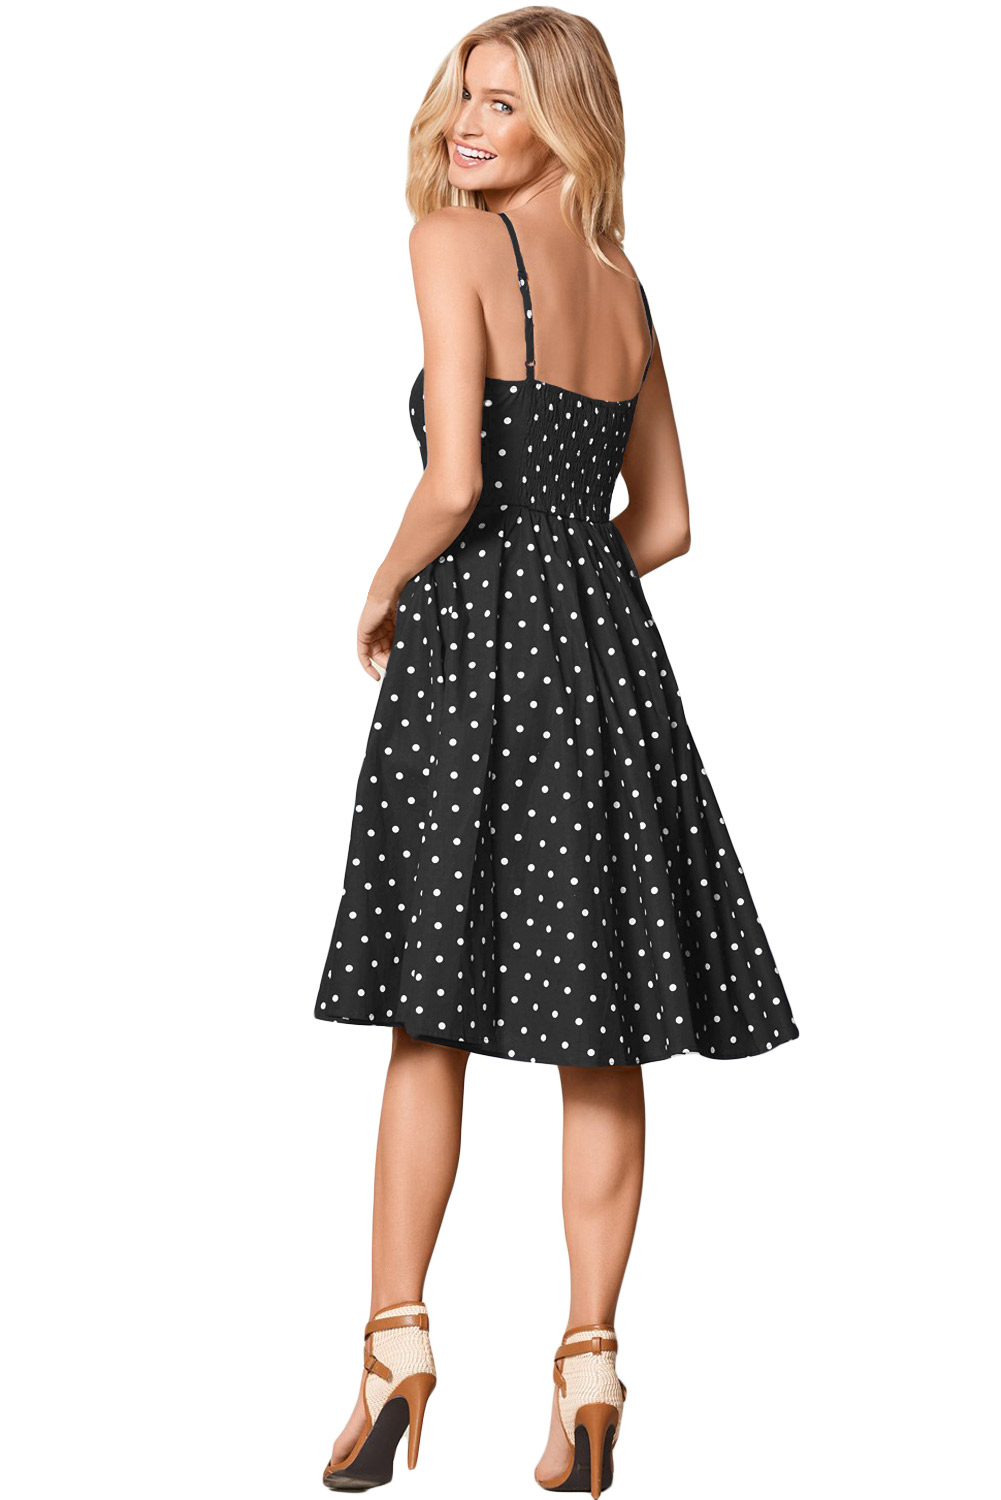 BY610141-2 Black White Polka Dot Flared Vintage Dress